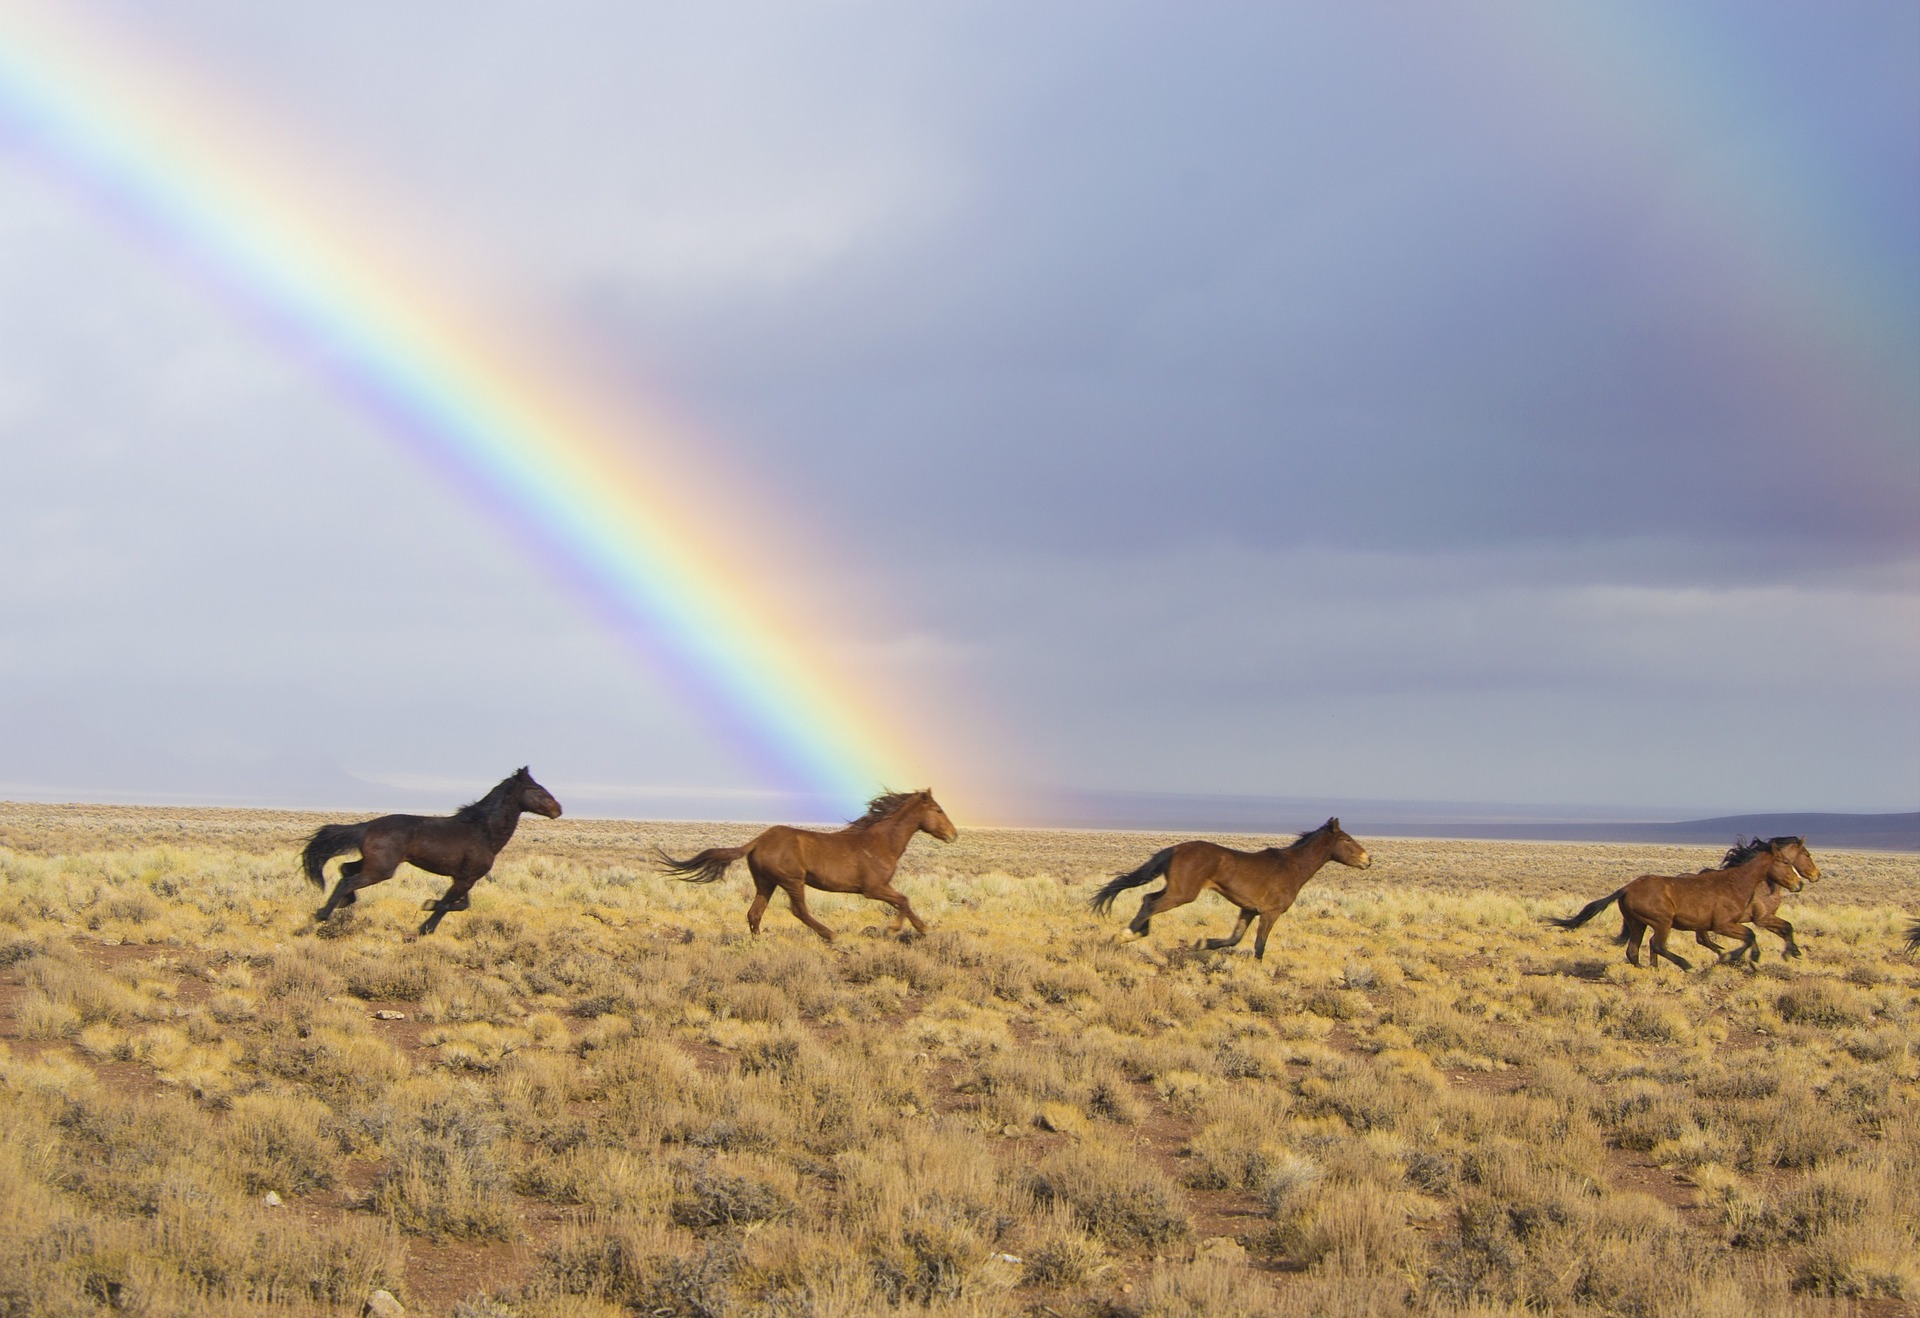 https://cdn.pixabay.com/photo/2017/04/18/15/22/wild-horses-2239420_960_720.jpg